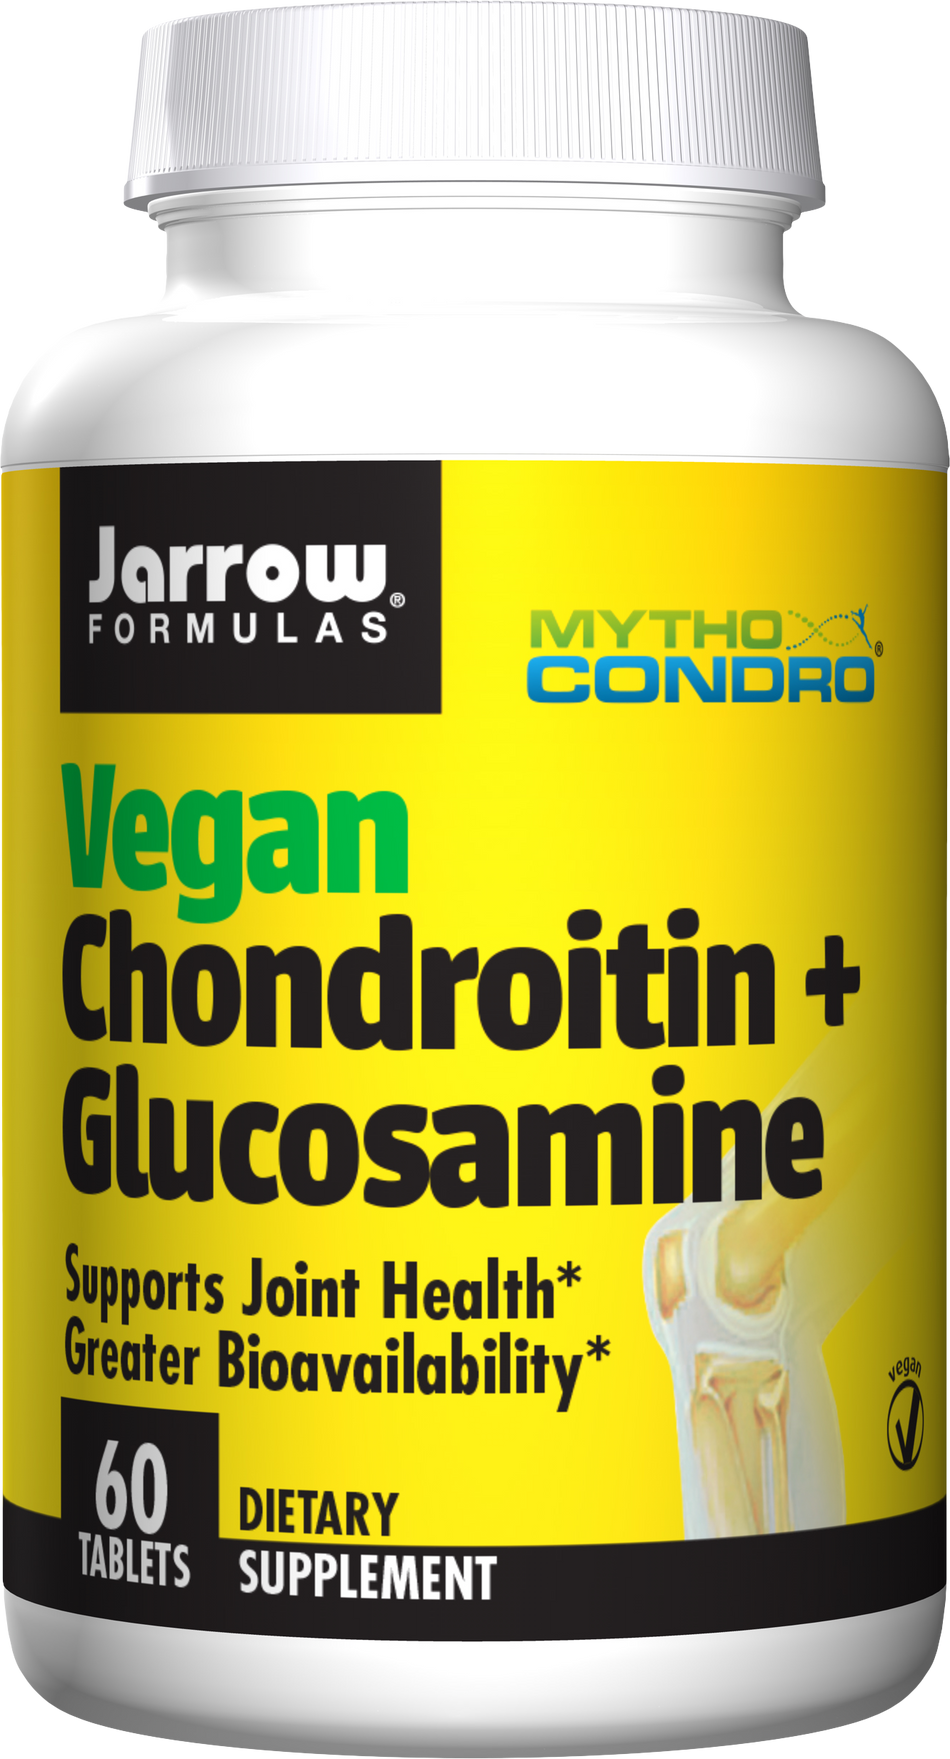 Vegan Chondroitin + Glucosamine - BadiZdrav.BG